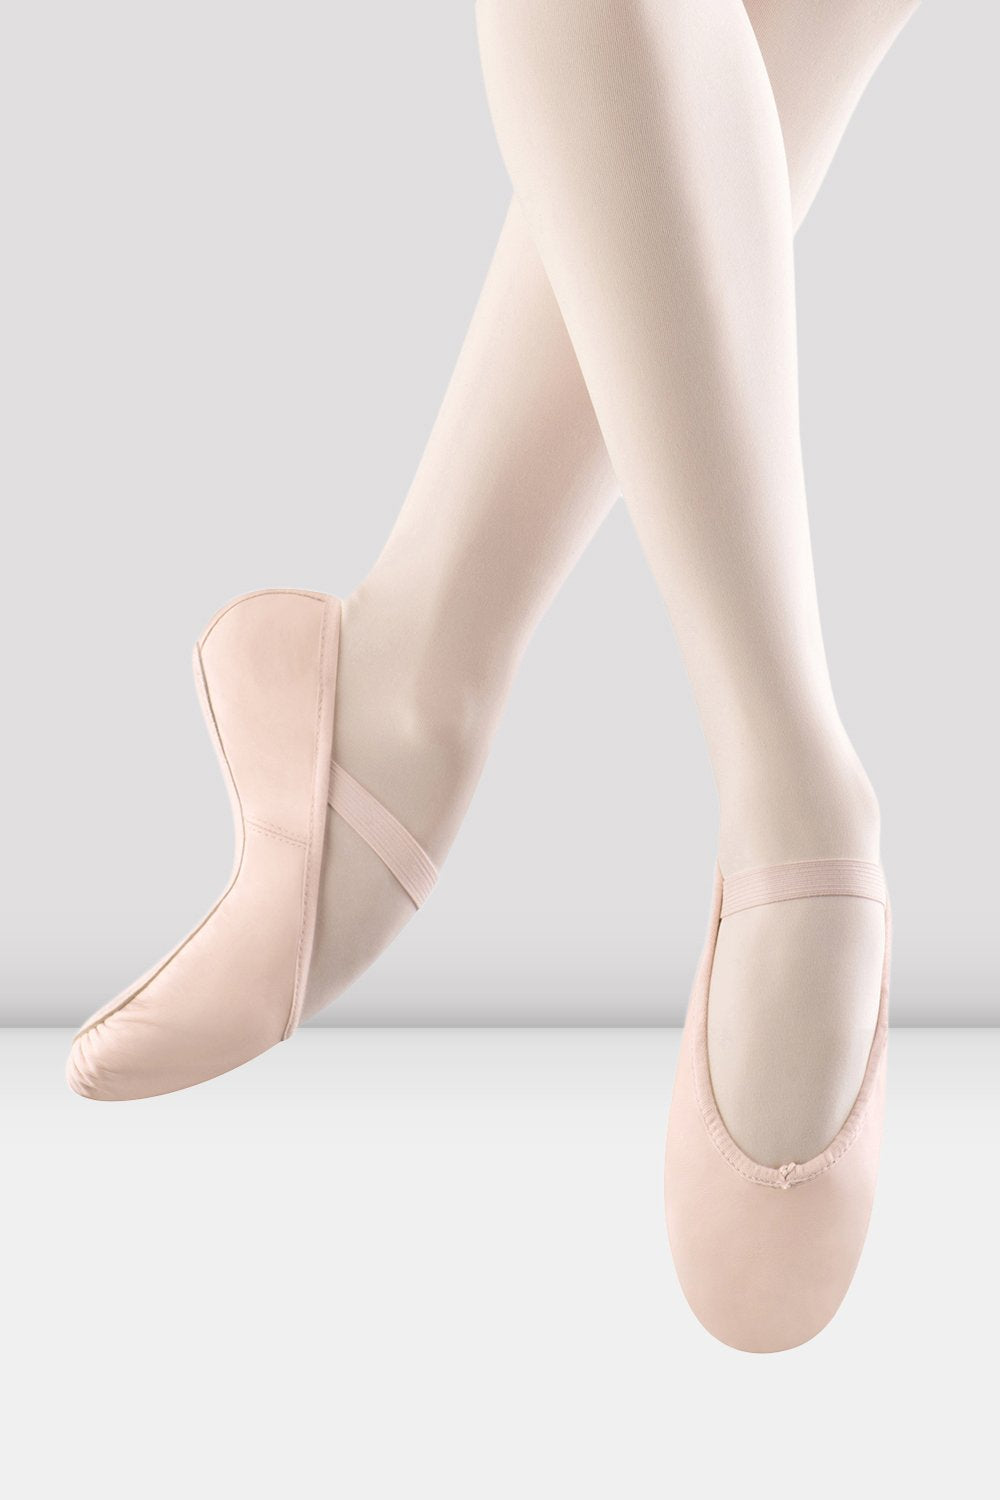 BLOCH Arise Ballet Shoe Pink